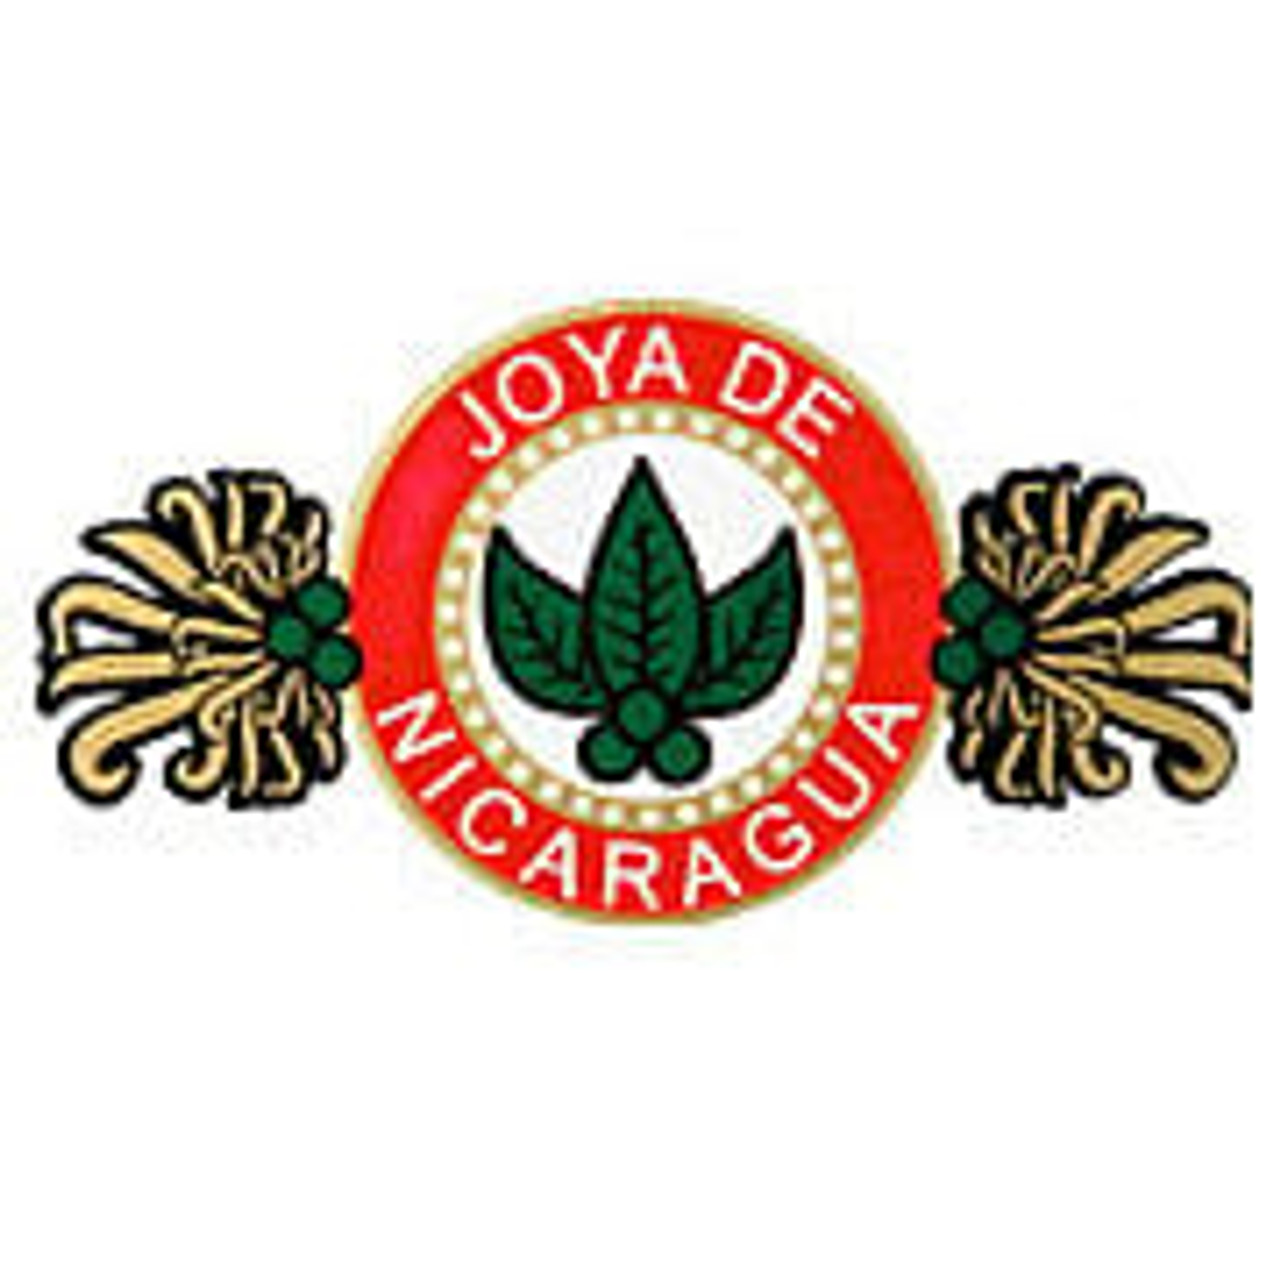 Joya de Nicaragua Logo